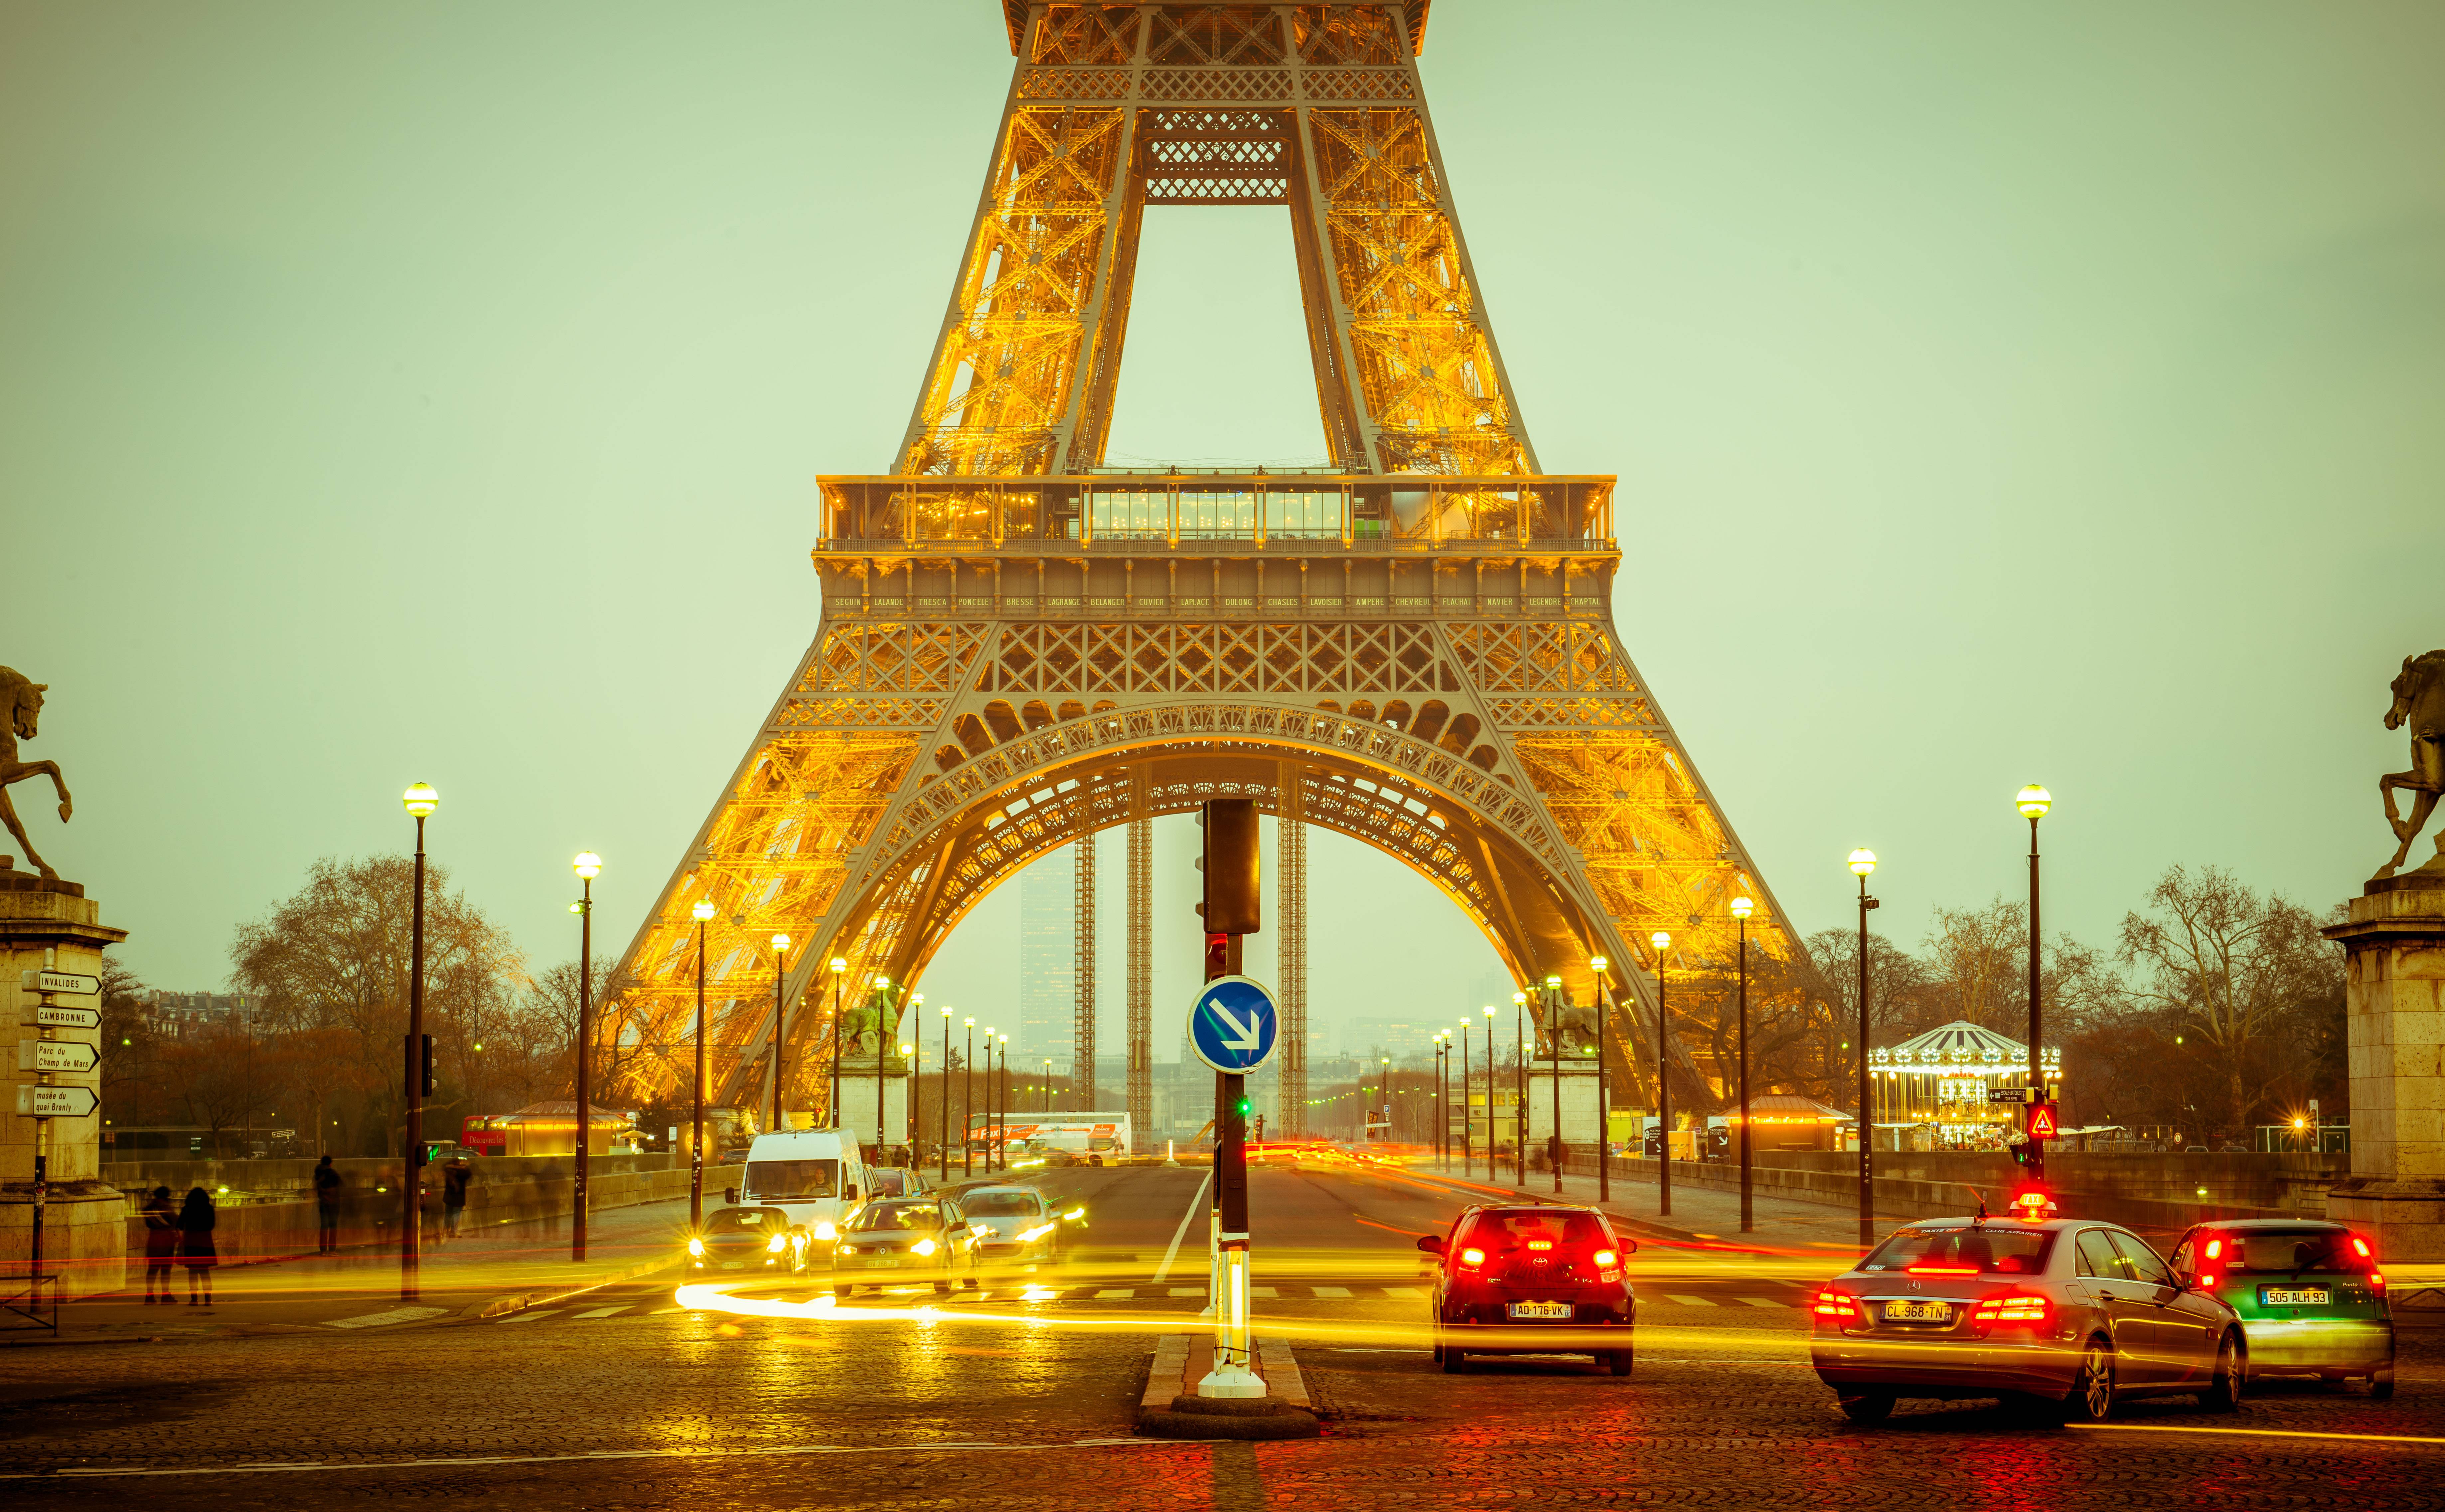 Wallpapers darkens Eiffel Tower evening city on the desktop